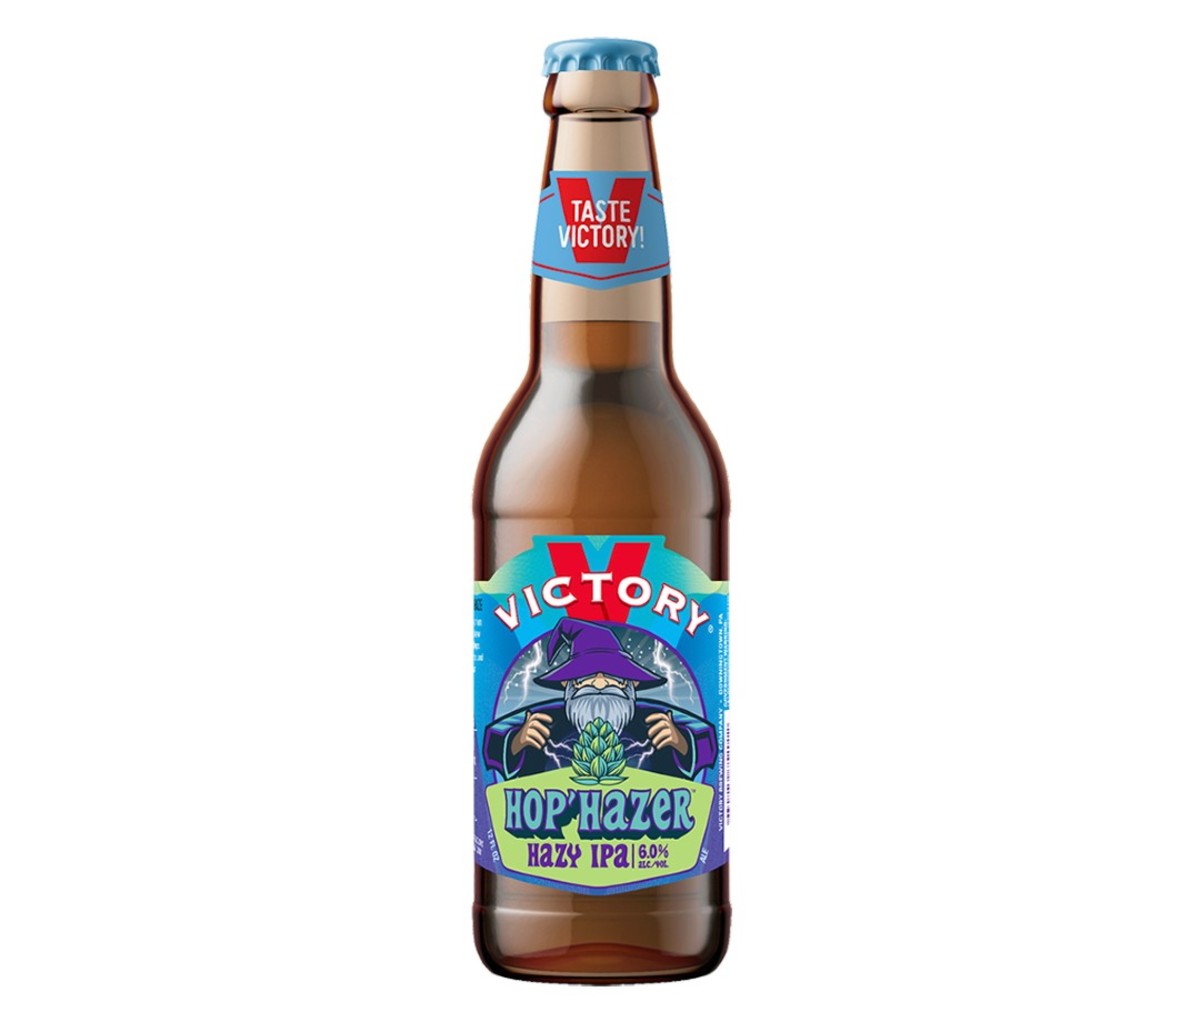 A bottle of Victory Hop’Hazer